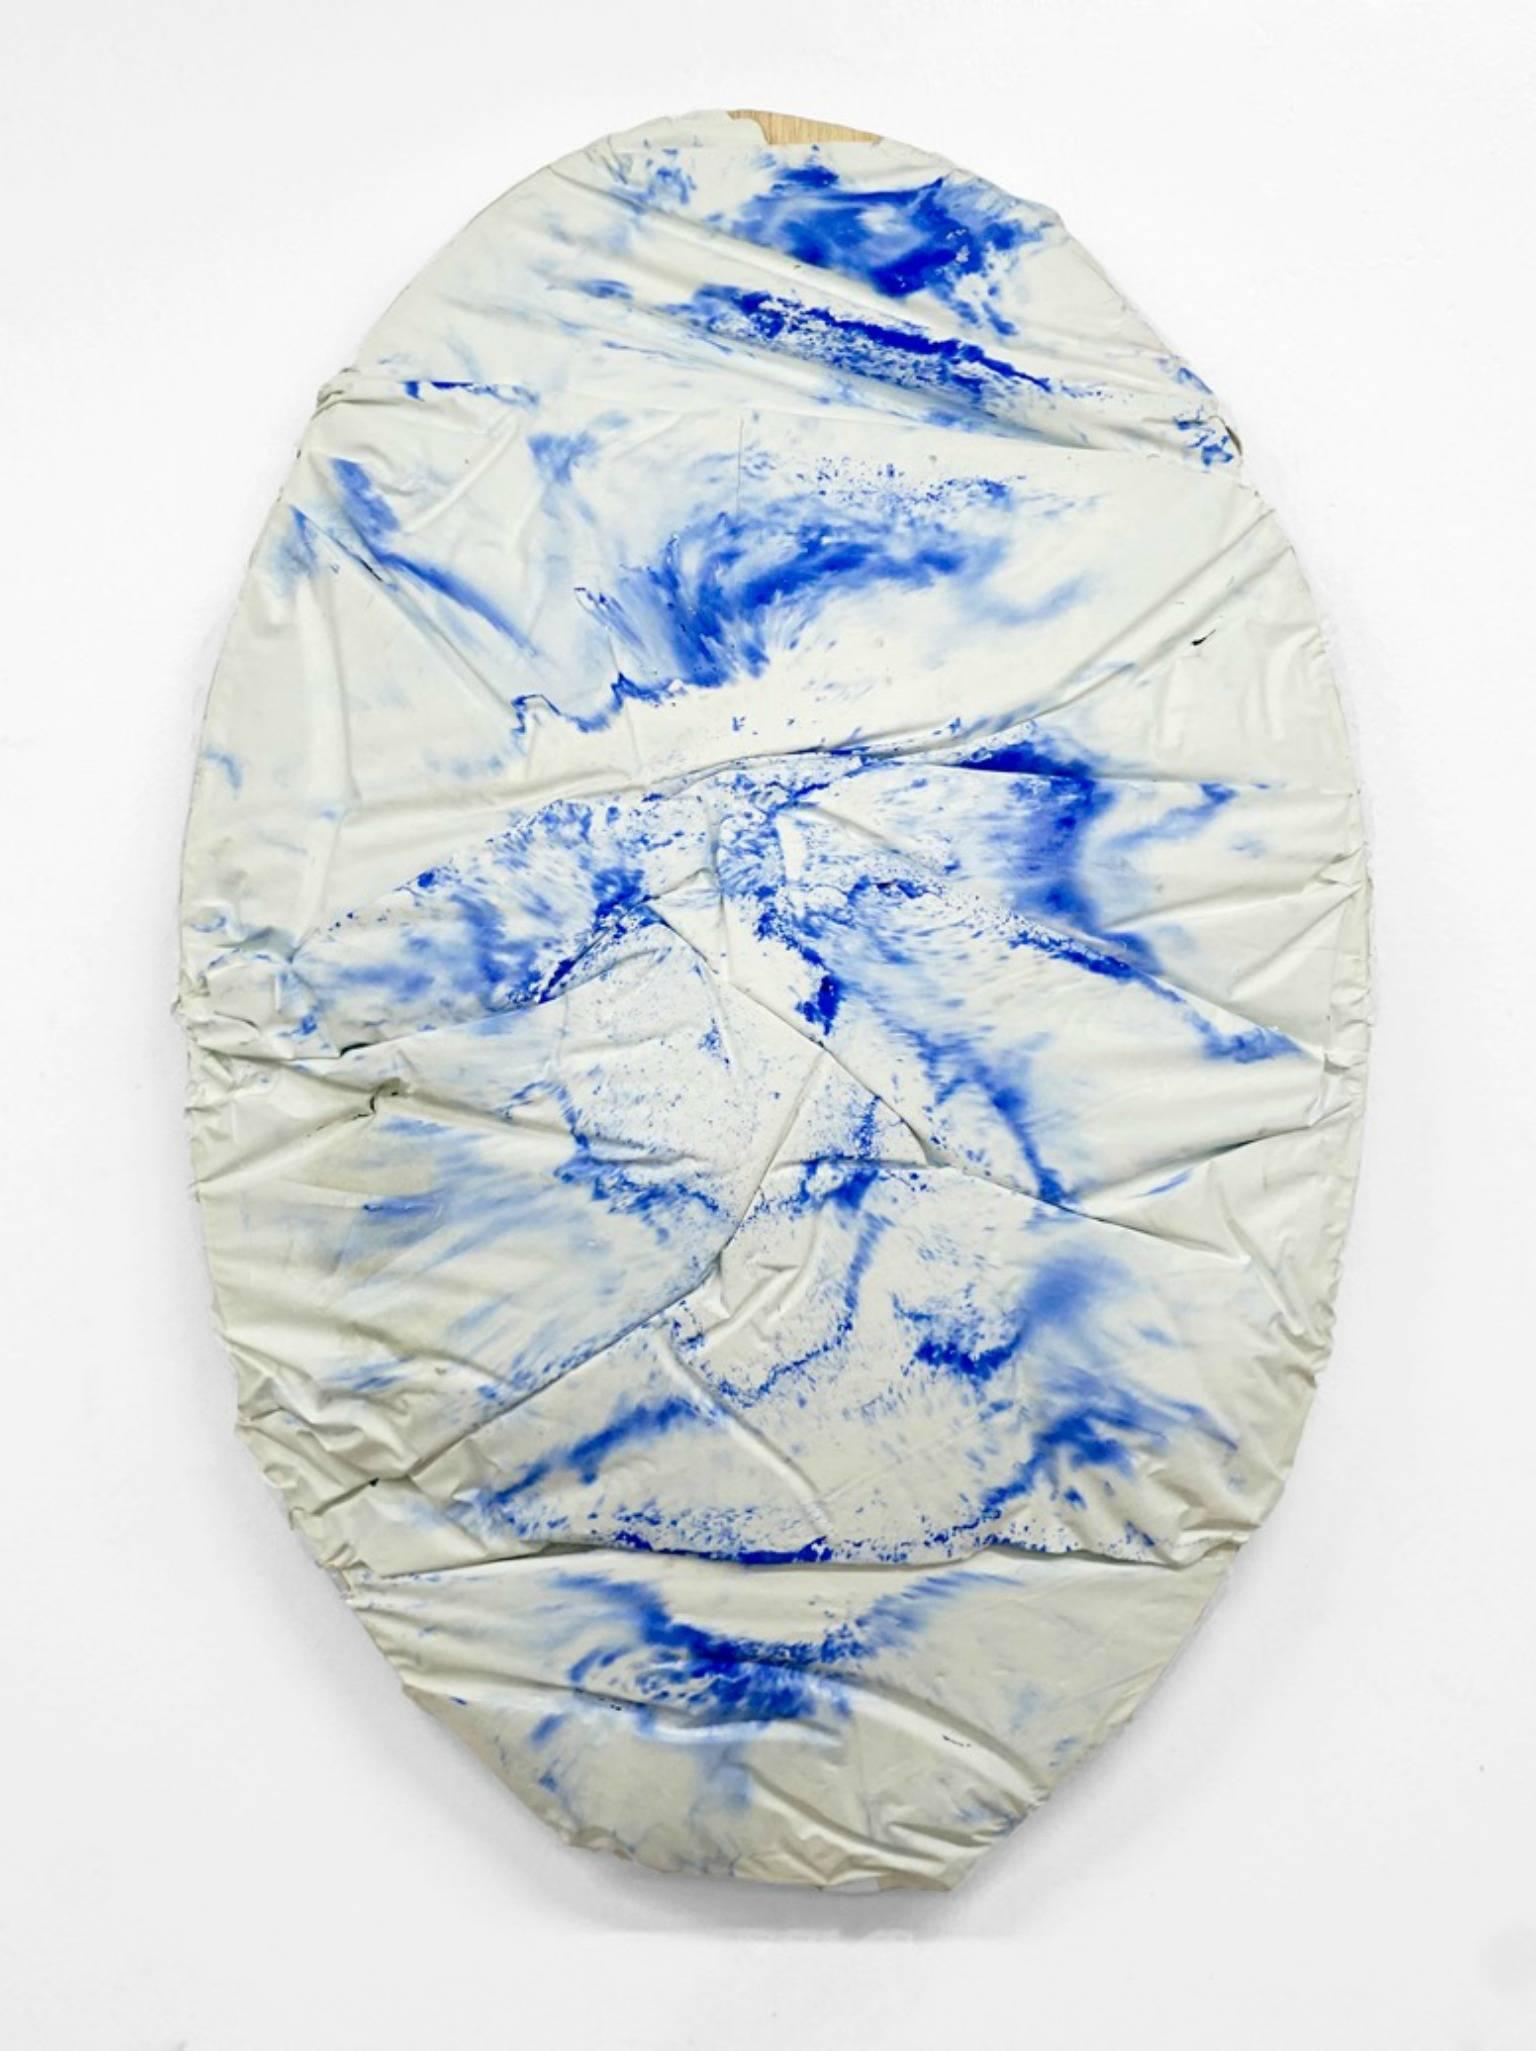 Alison Jardine  Abstract Sculpture - Alison Jardine, Urban Flora 27 (Blue Skies), cement and pigment sculpture